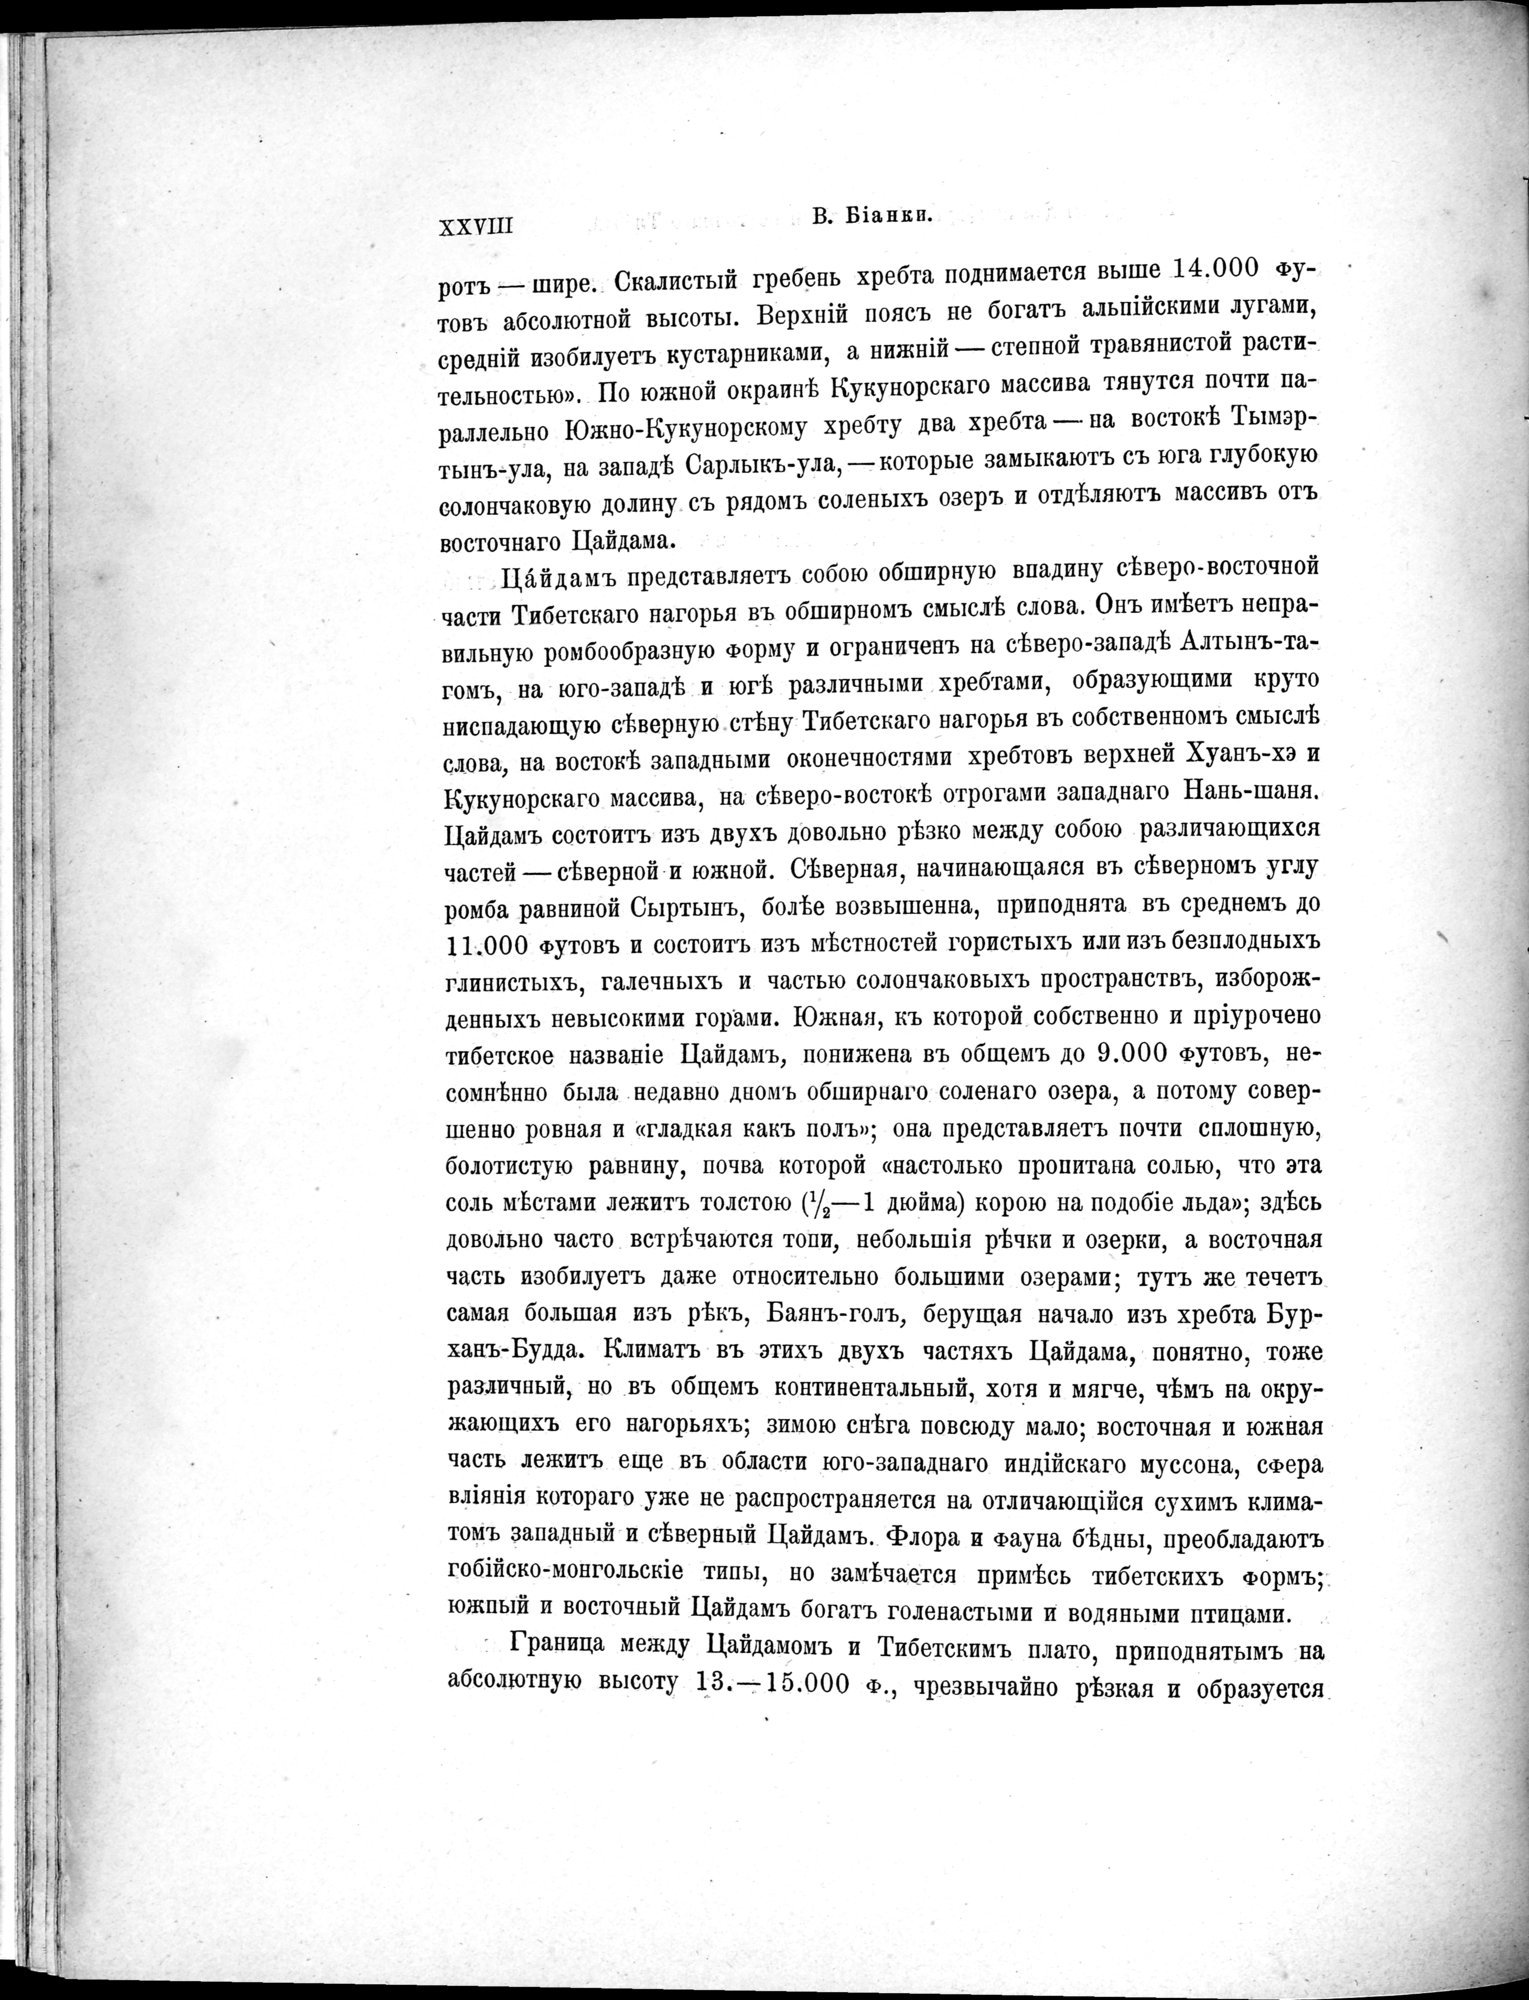 Mongoliia i Kam : vol.5 / Page 42 (Grayscale High Resolution Image)